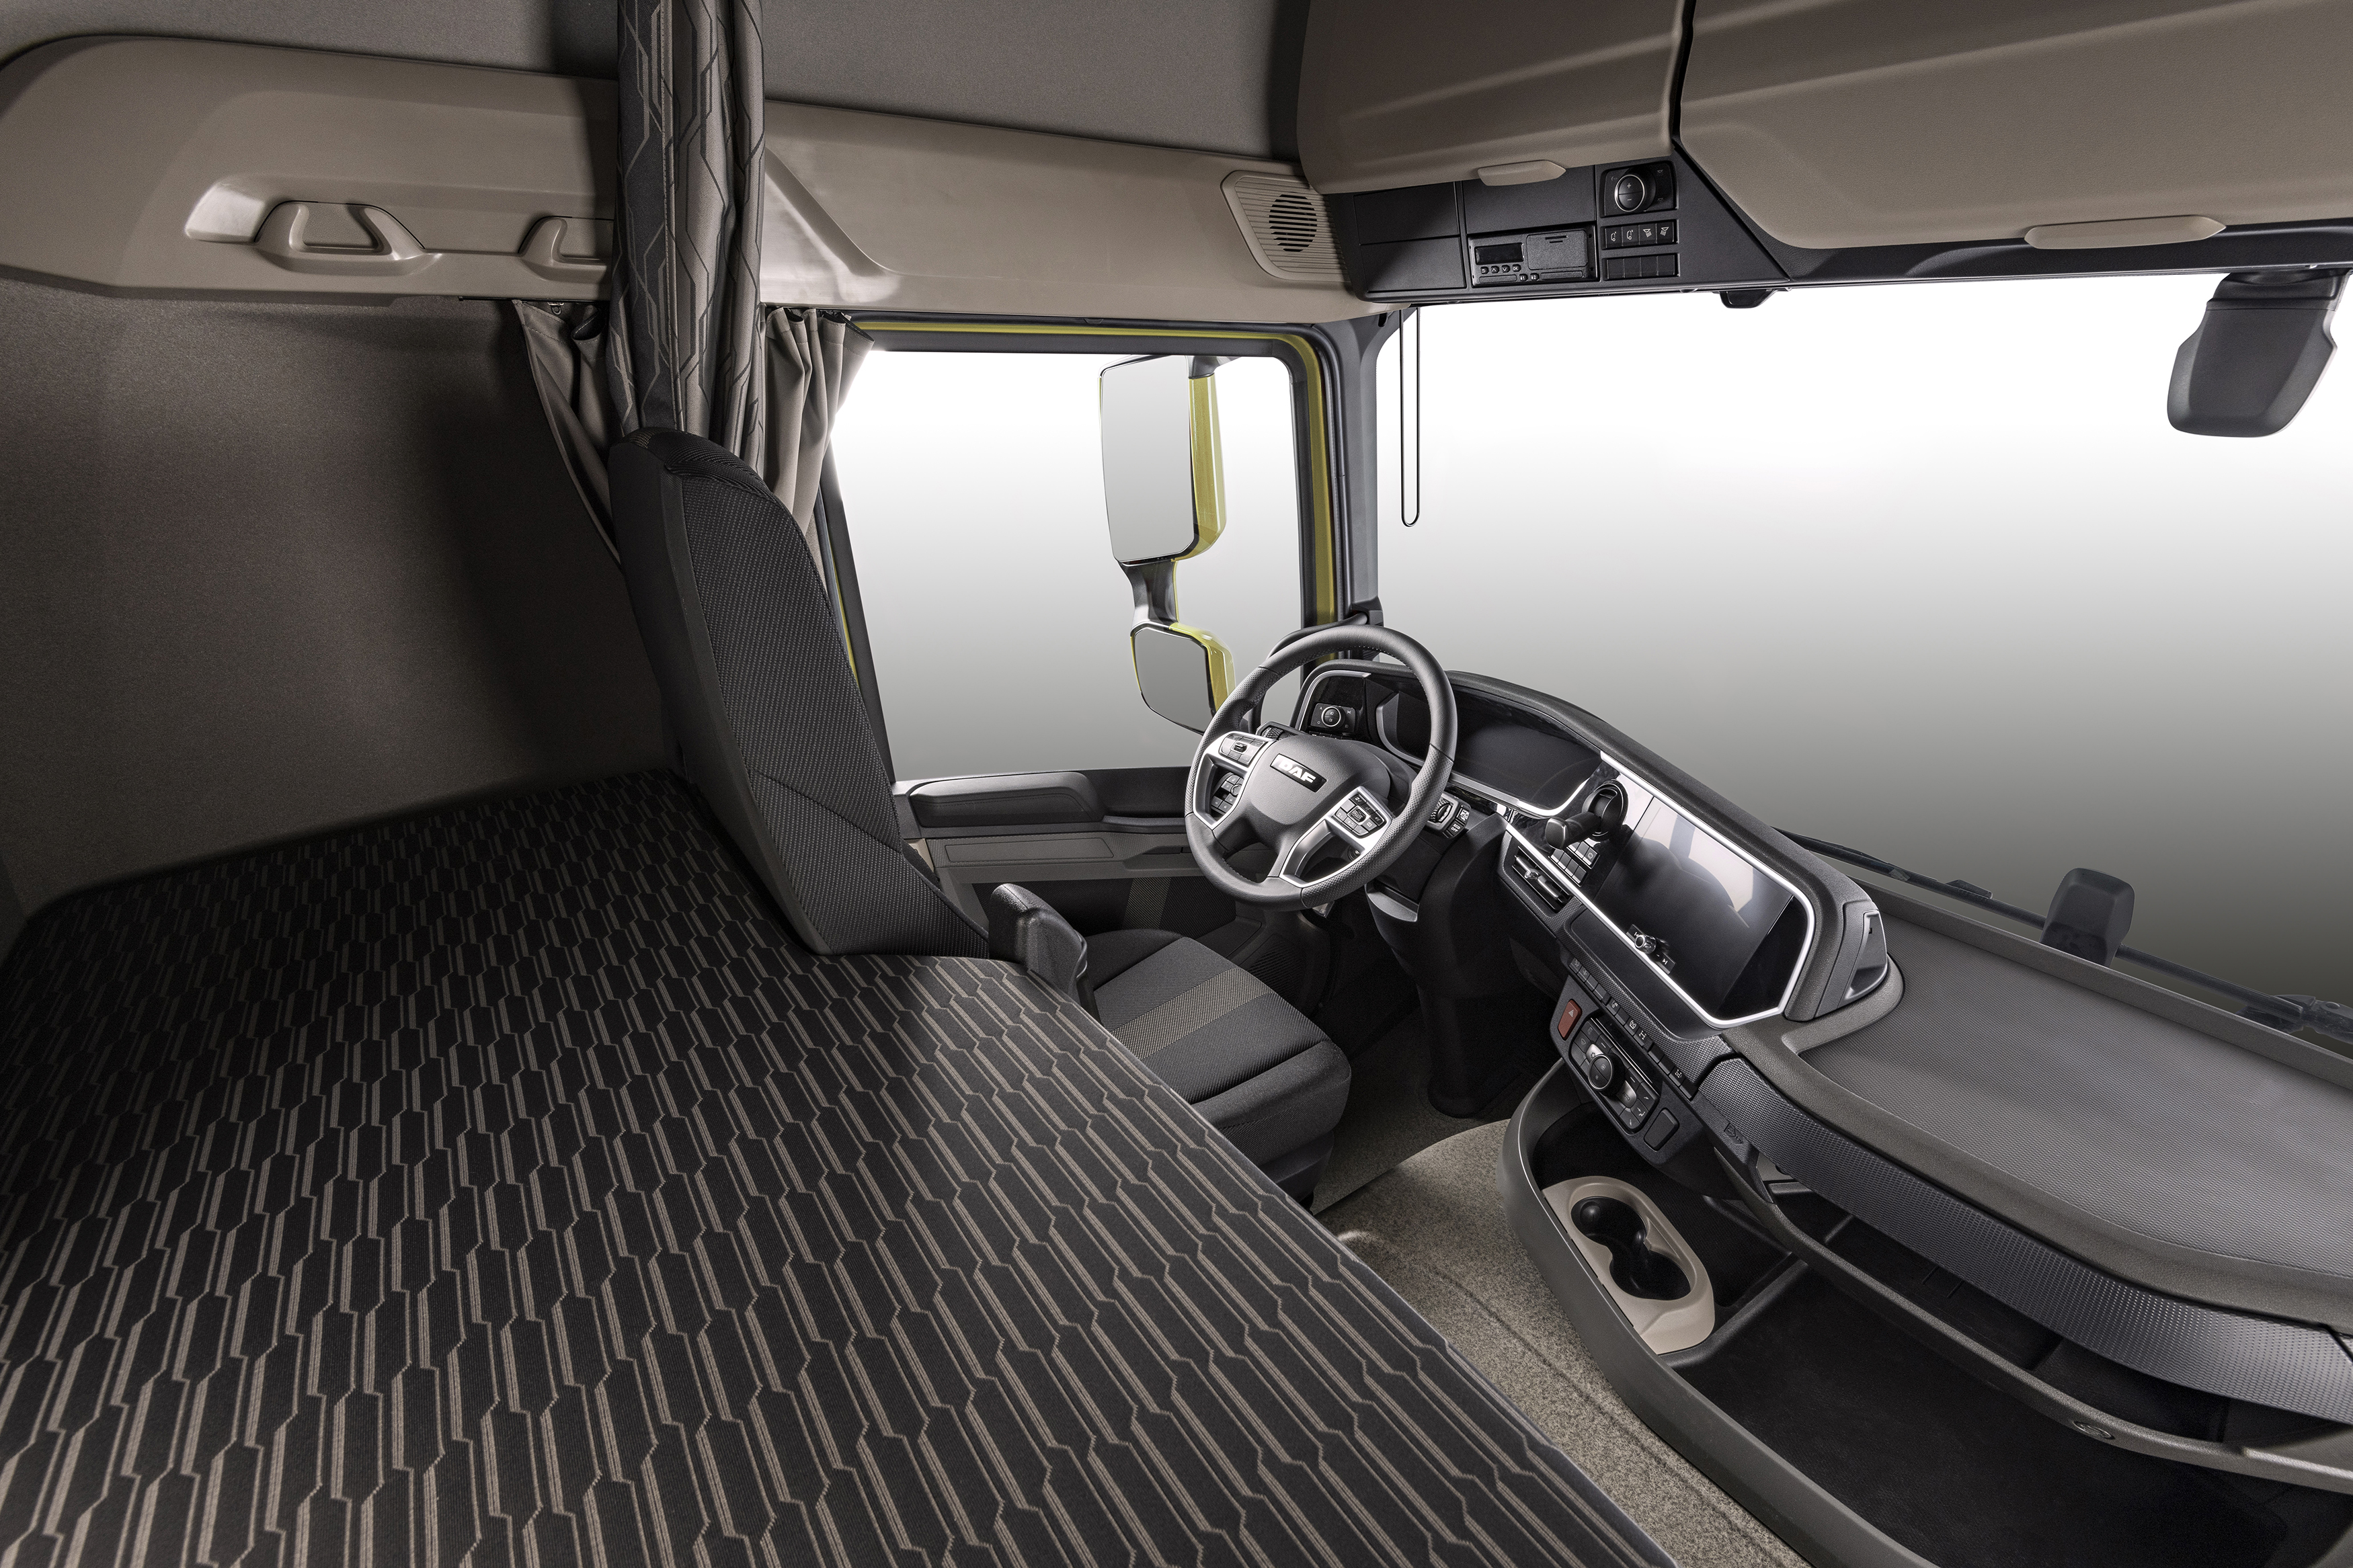 47 DAF XD Interior Overview Sleeper High Cab